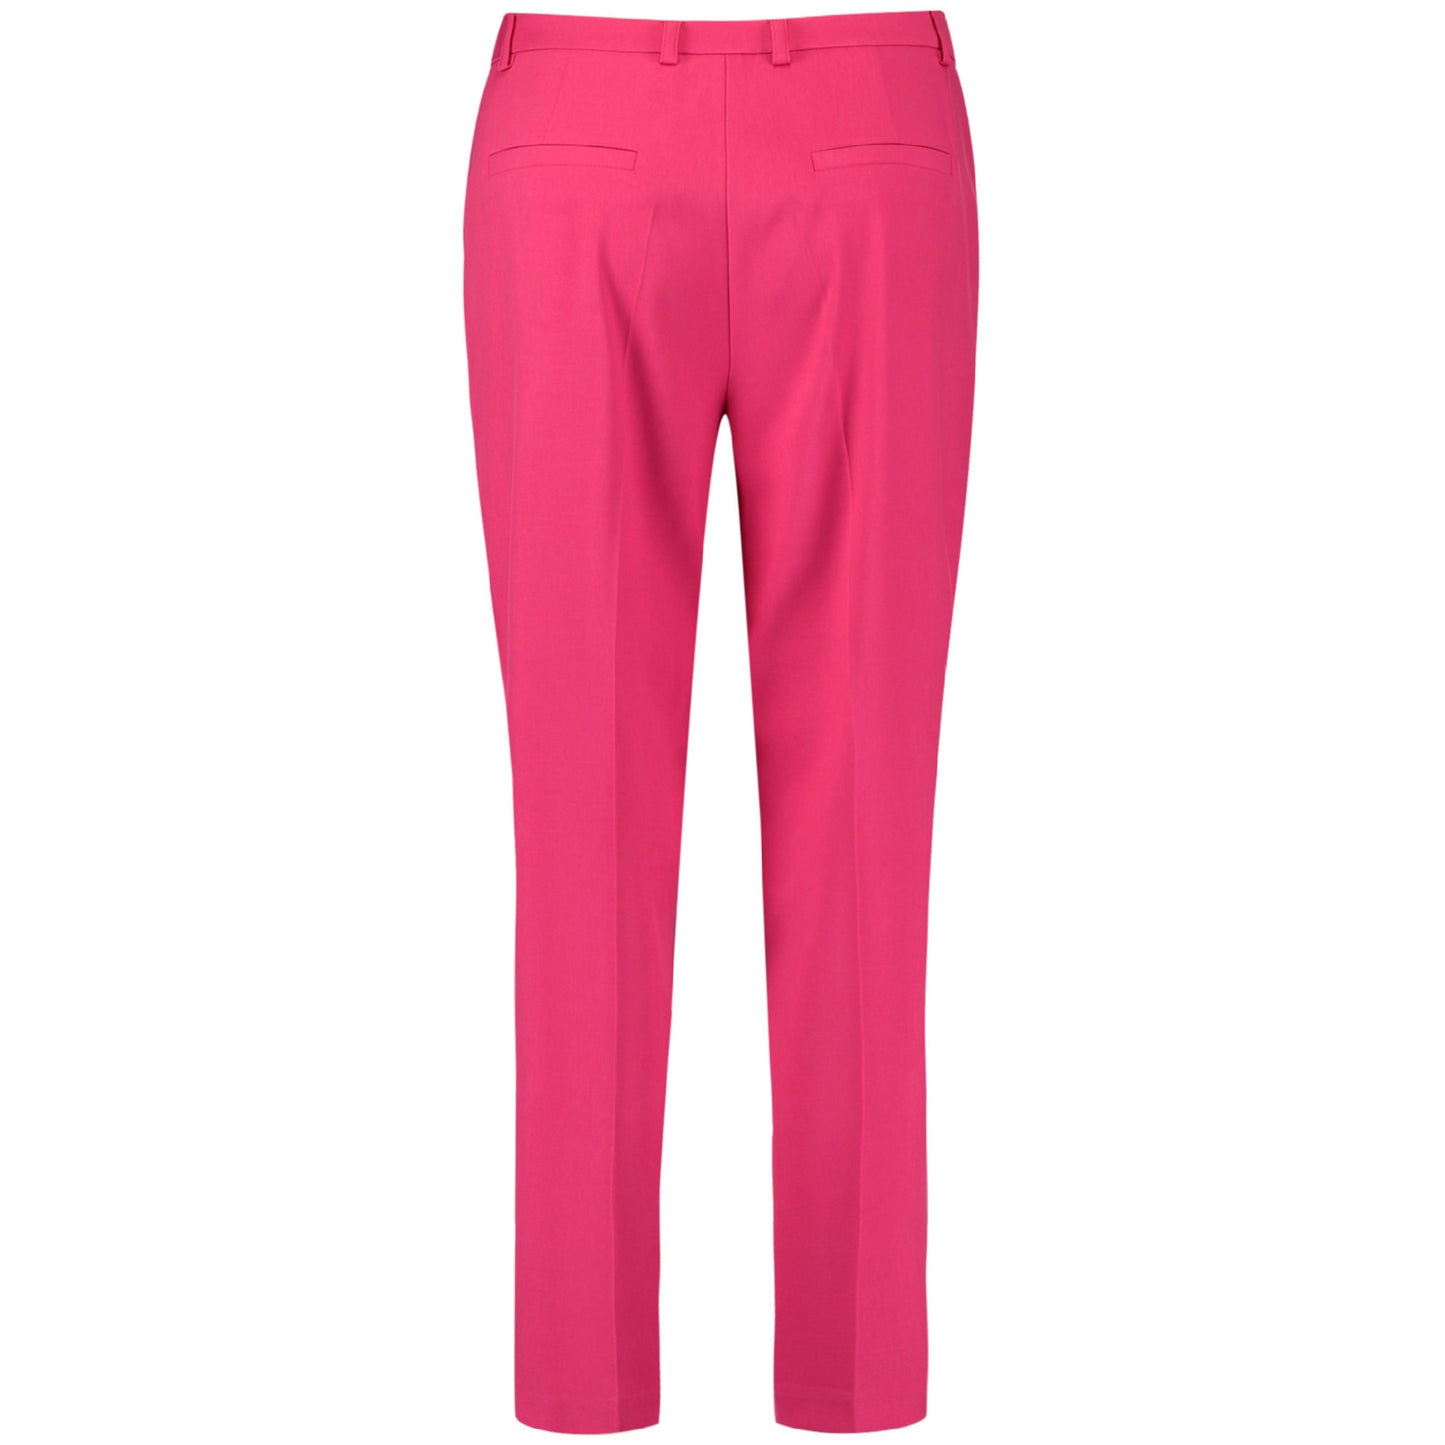 Taifun 420413 11254 3400 Luminous Pink Trousers